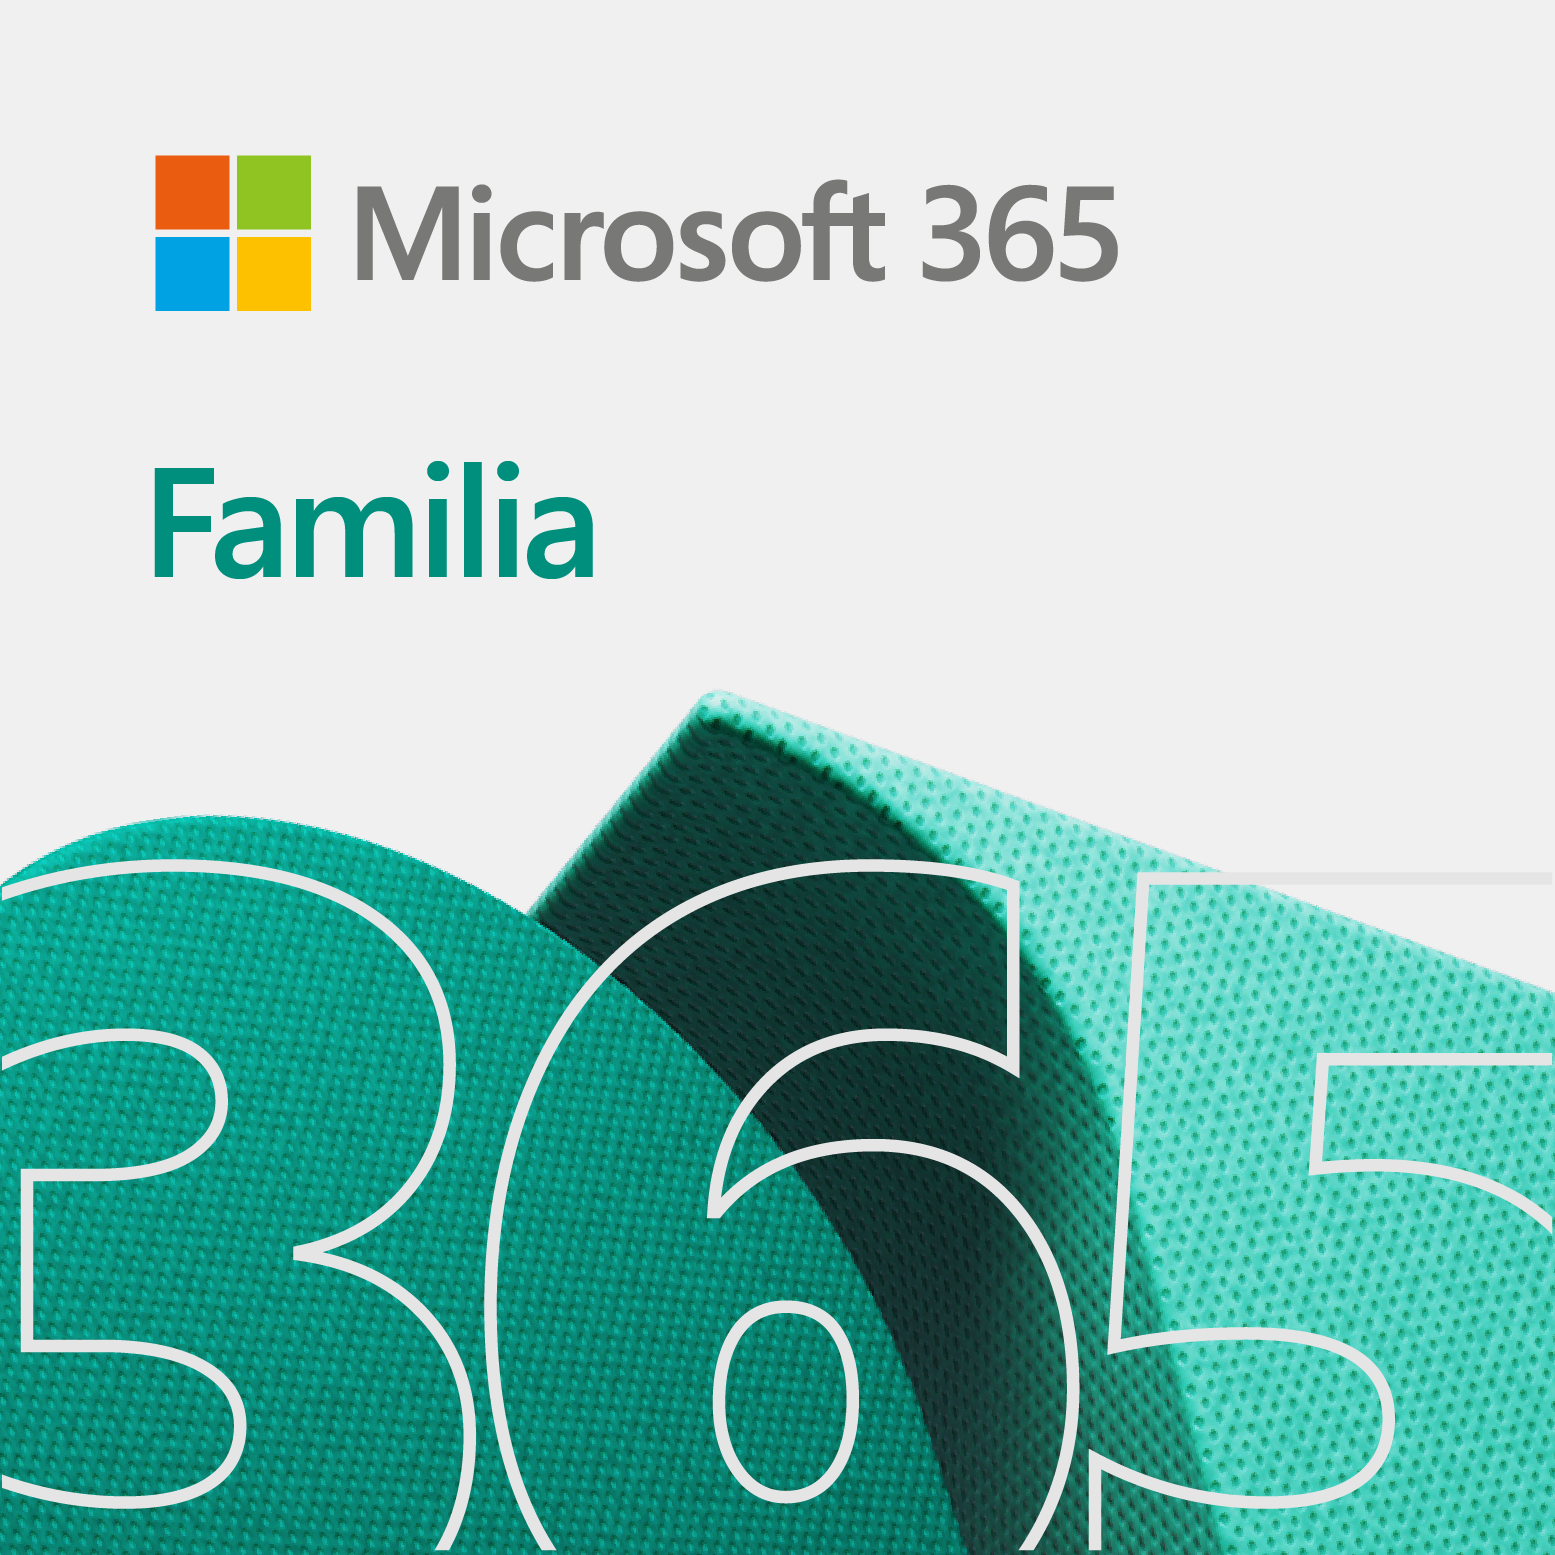 Comprar licencia Microsoft Office 365